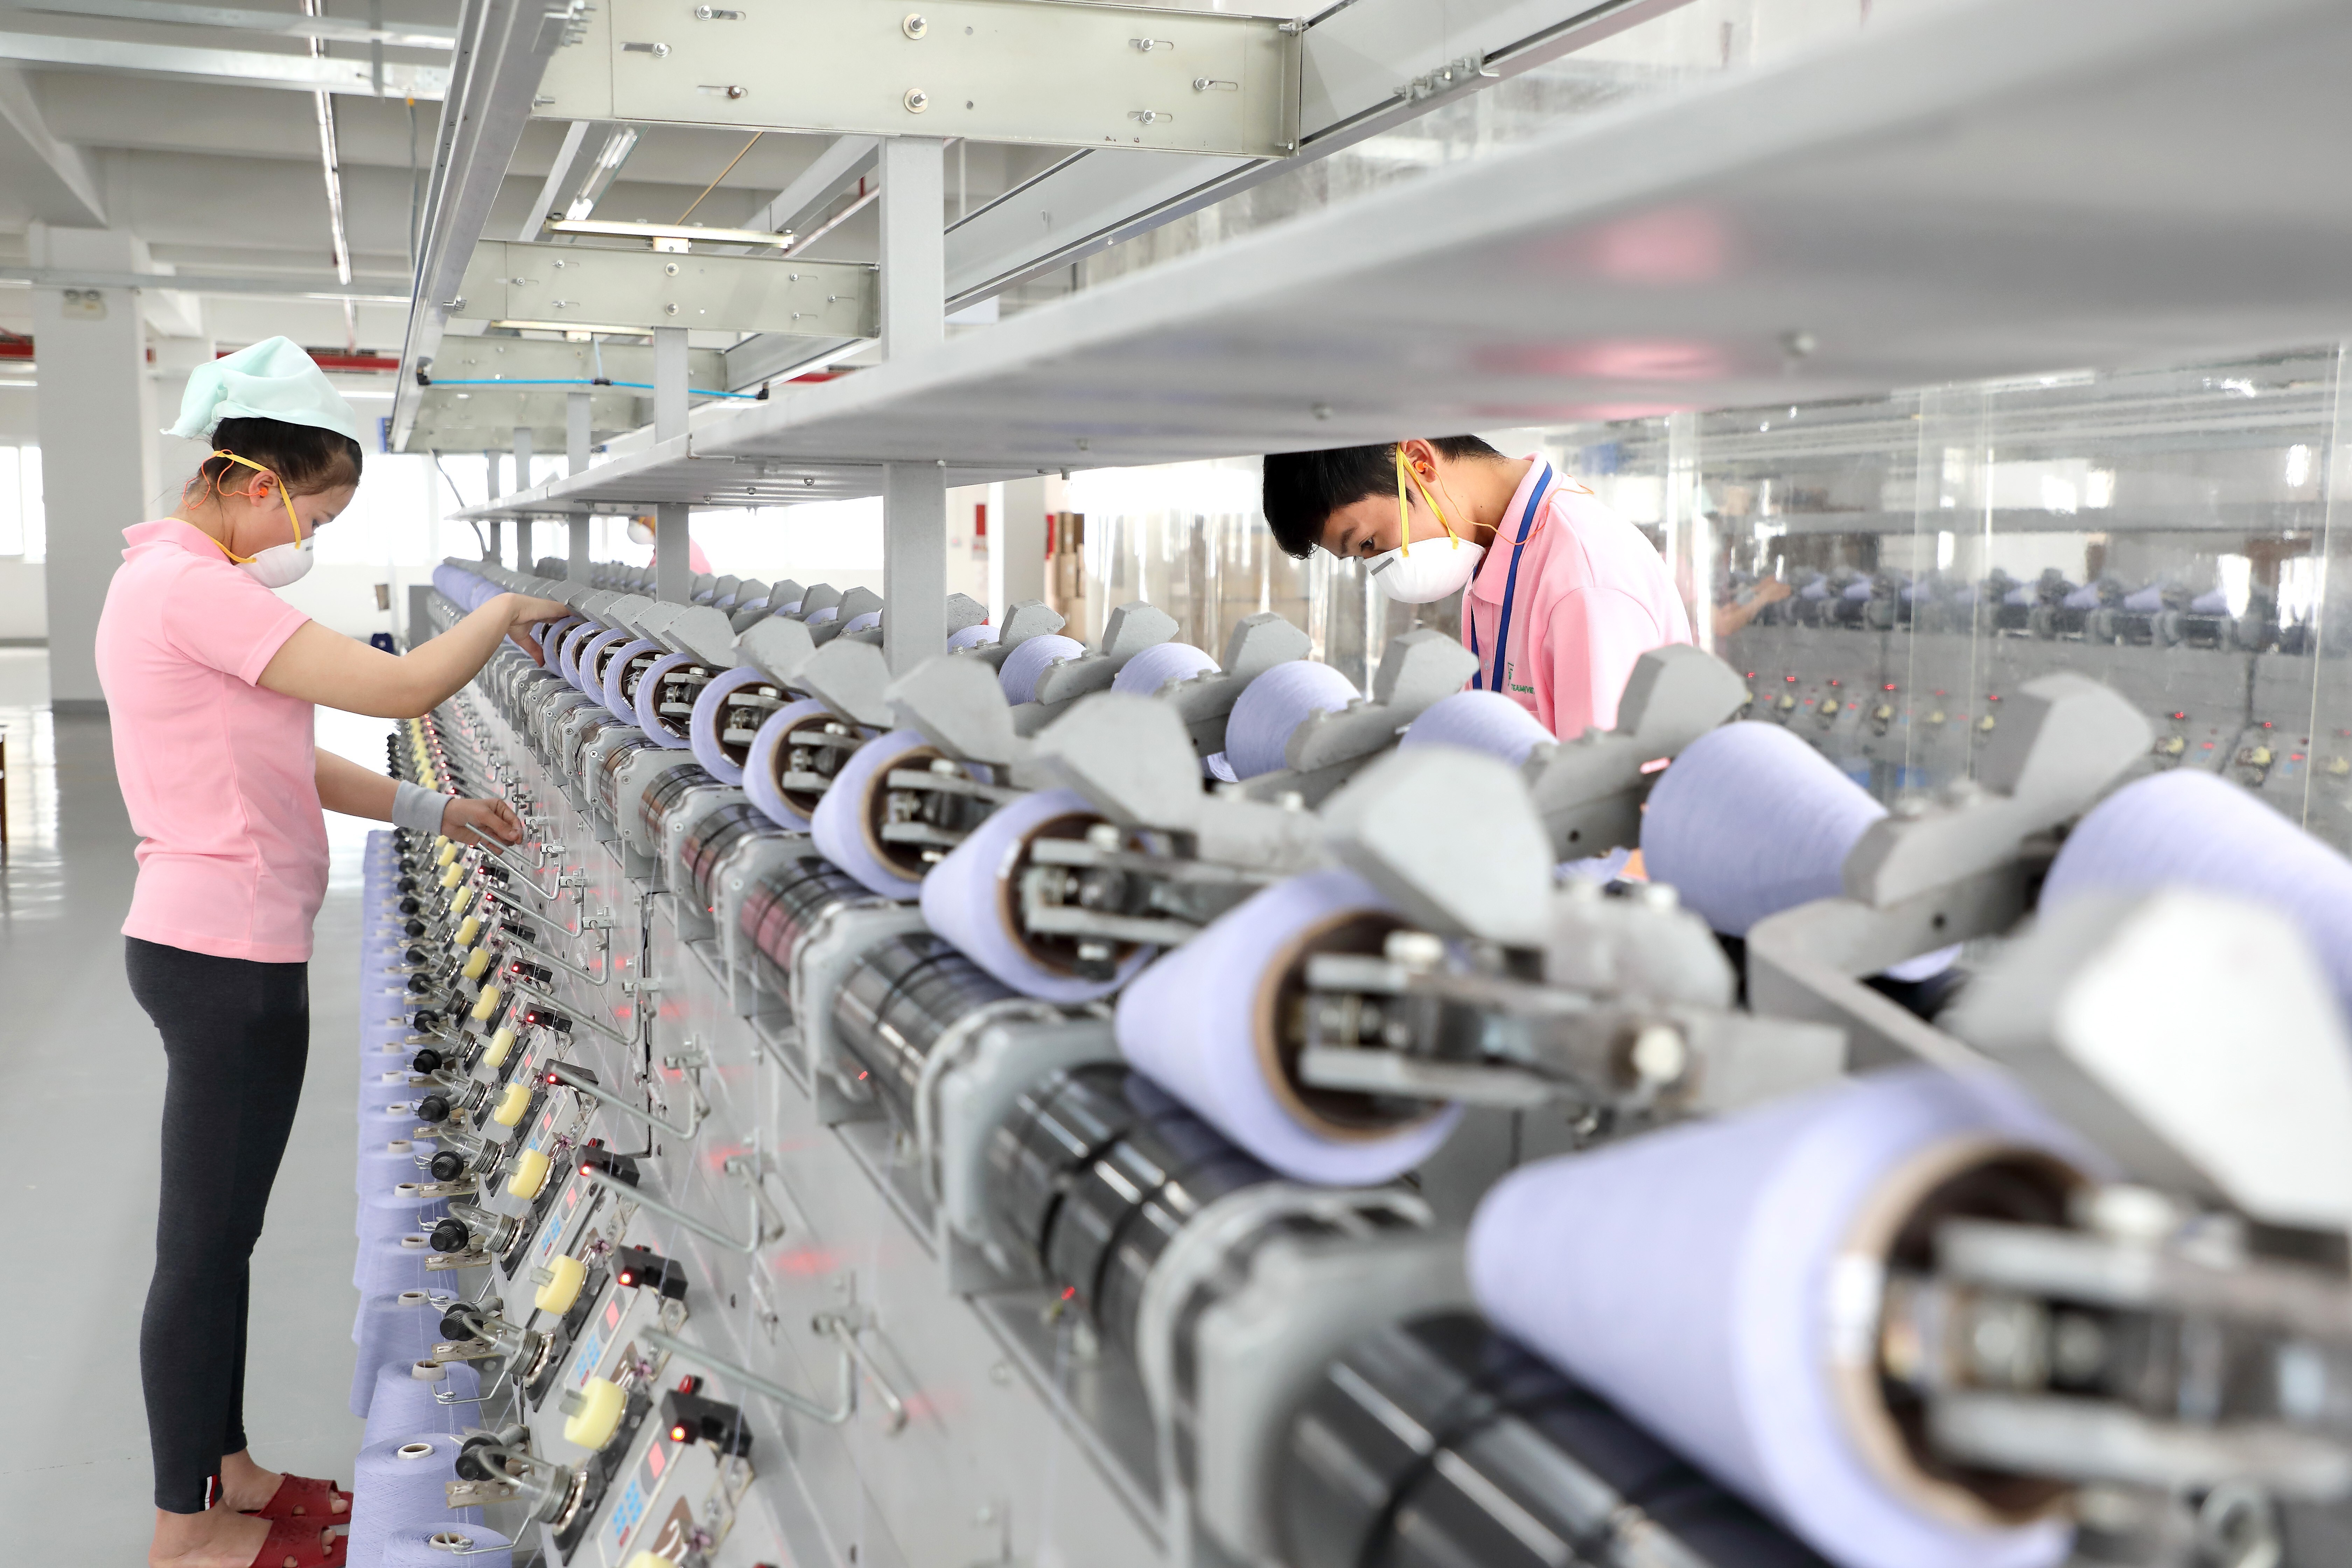 Nameson has spent 1.6 billion yuan on its manufacturing business in Huizhou. Photo: Handout